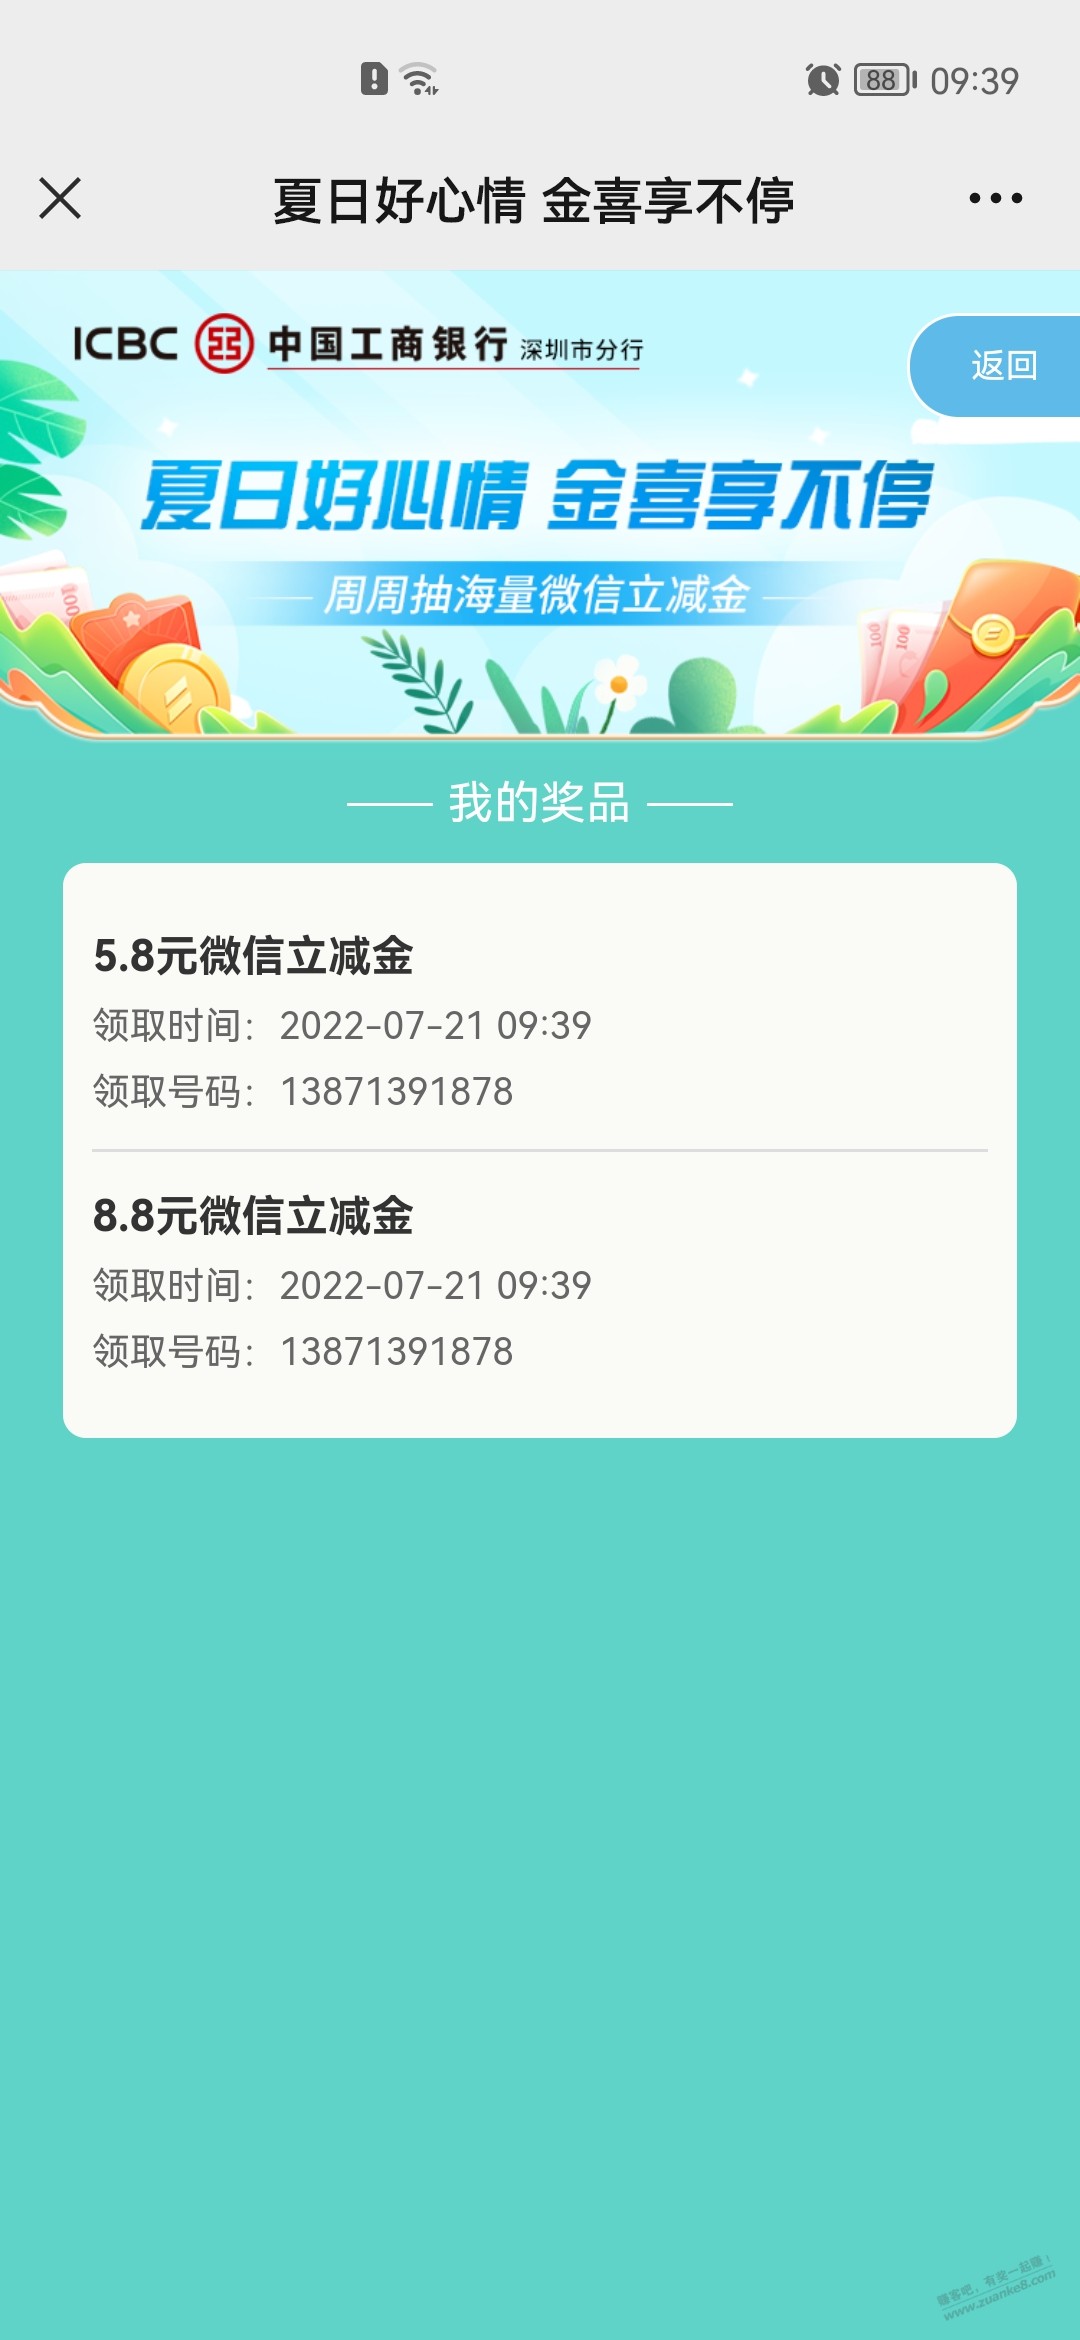 vx工银深圳周四有惊喜抽奖大洪水!!!-惠小助(52huixz.com)